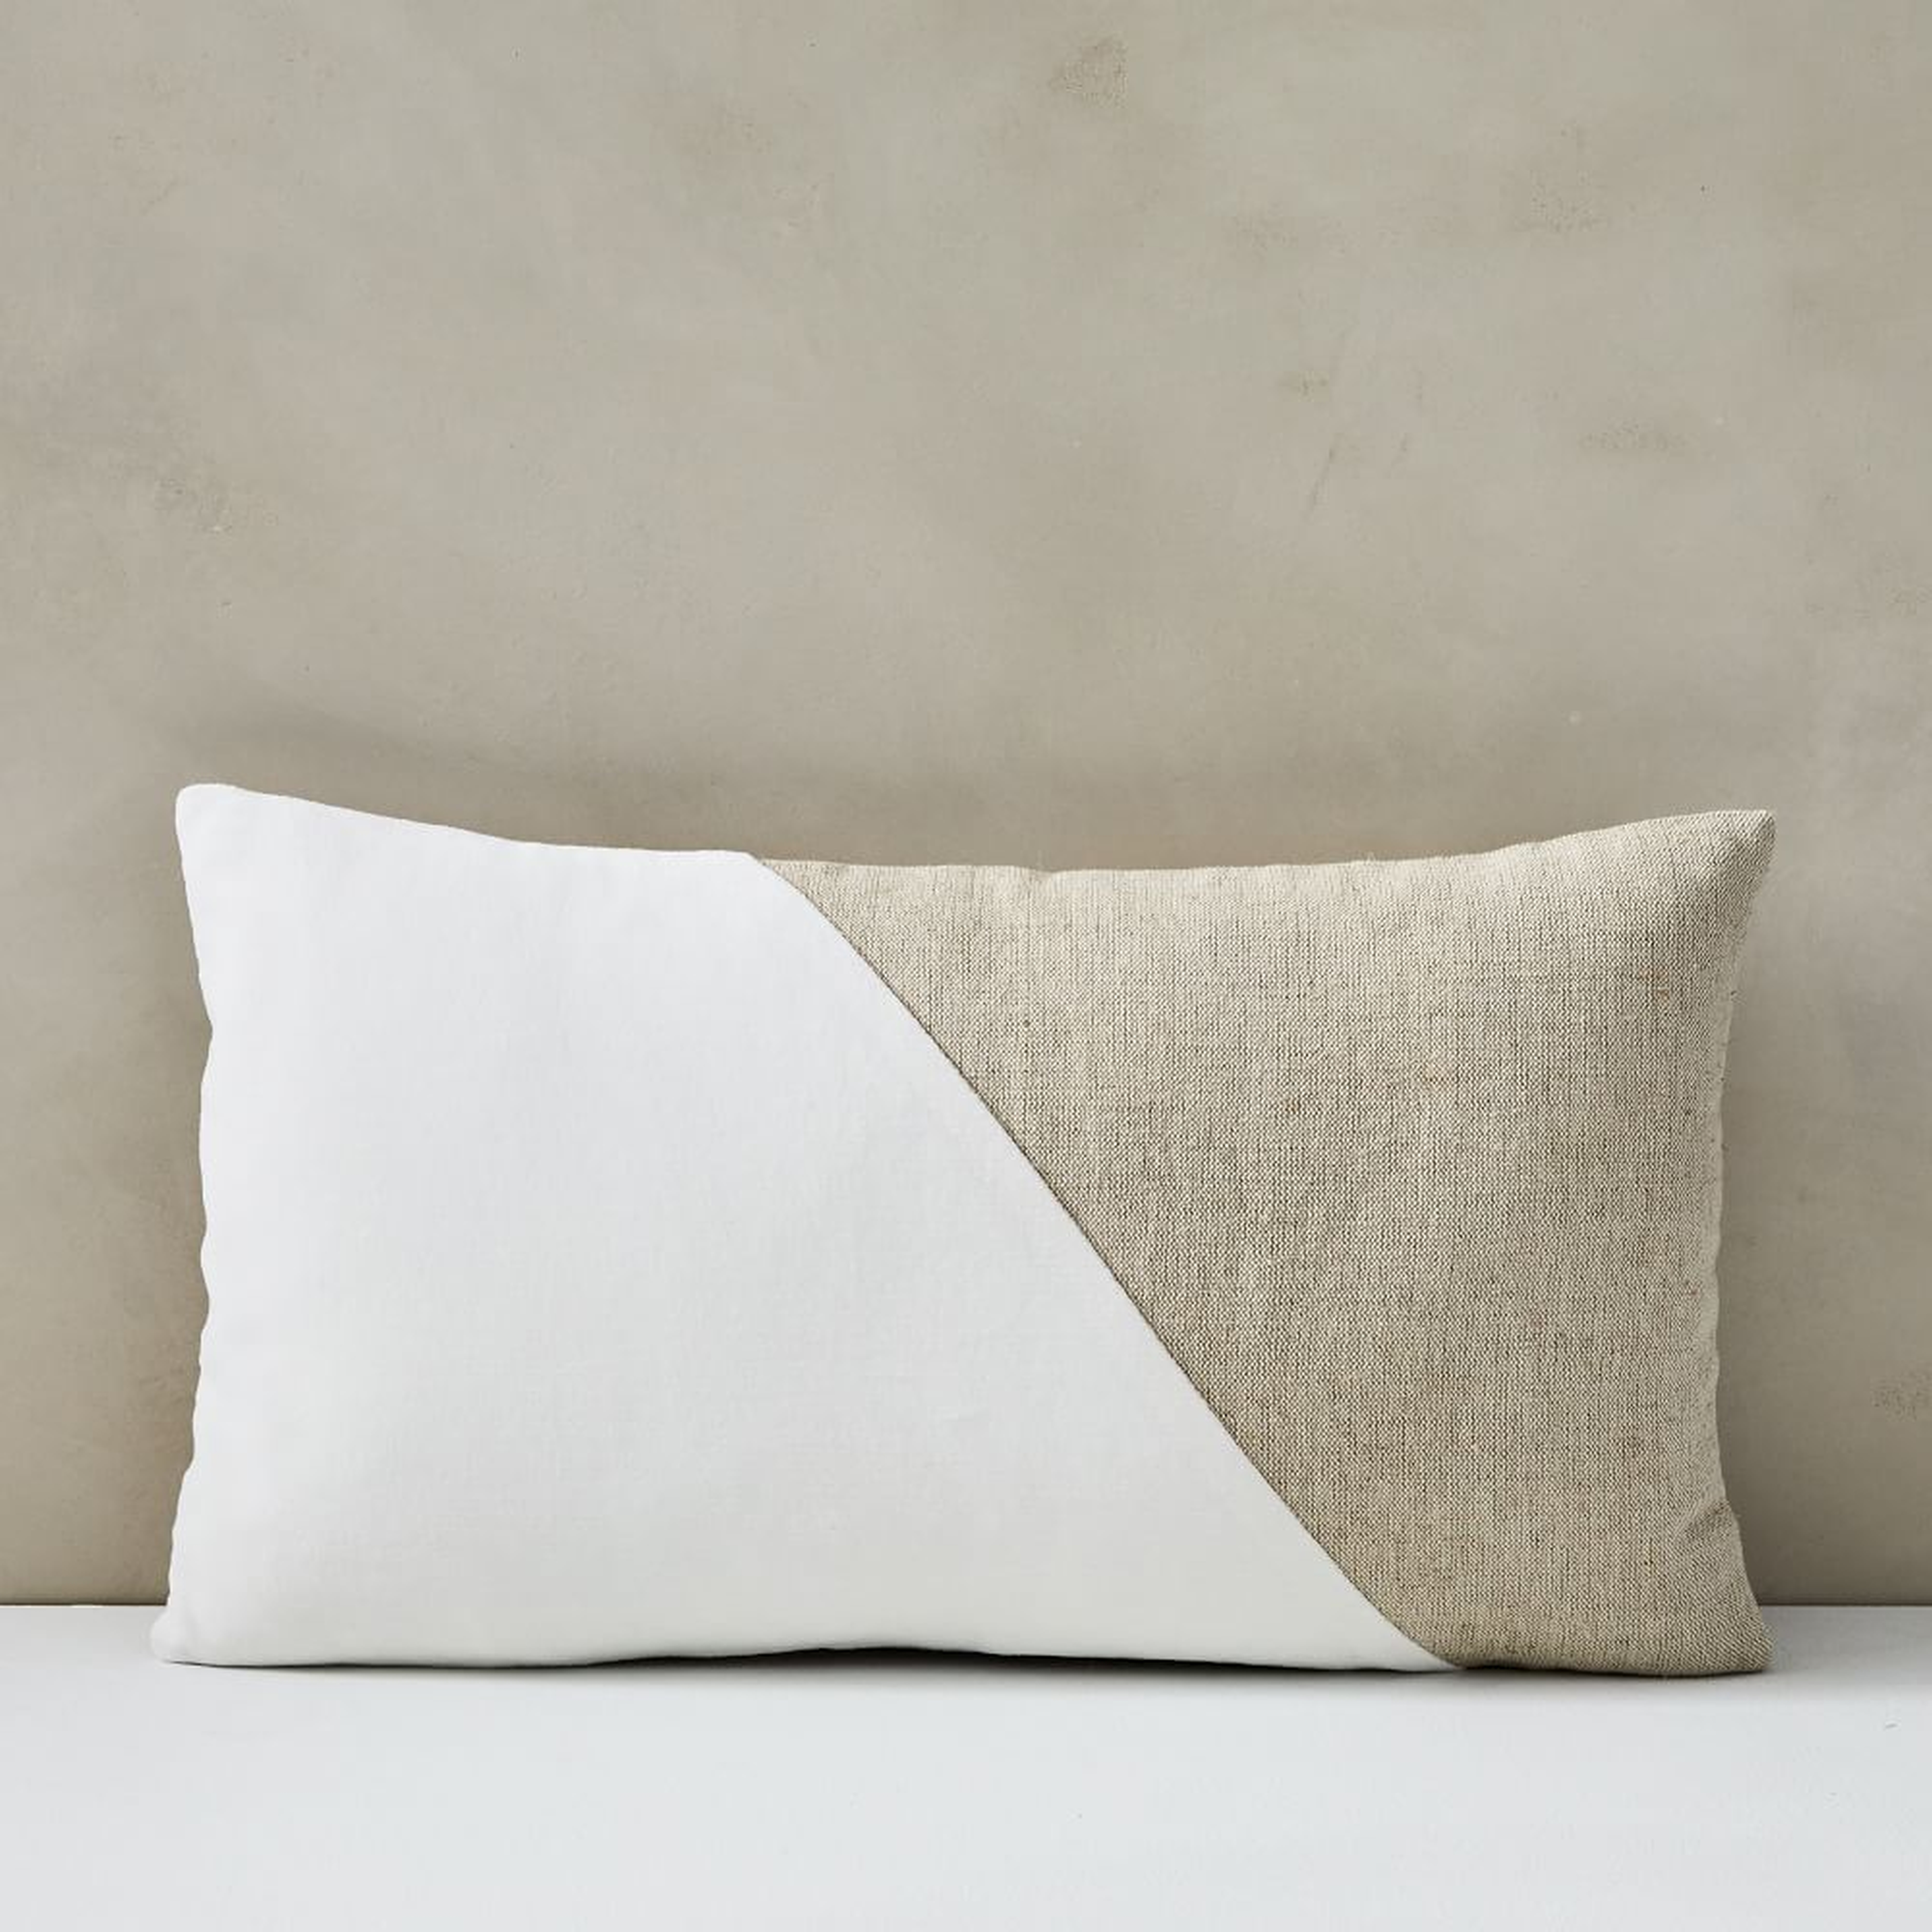 Cotton Linen + Velvet Corners Pillow Cover, 12"x21", White, Set of 2 - West Elm